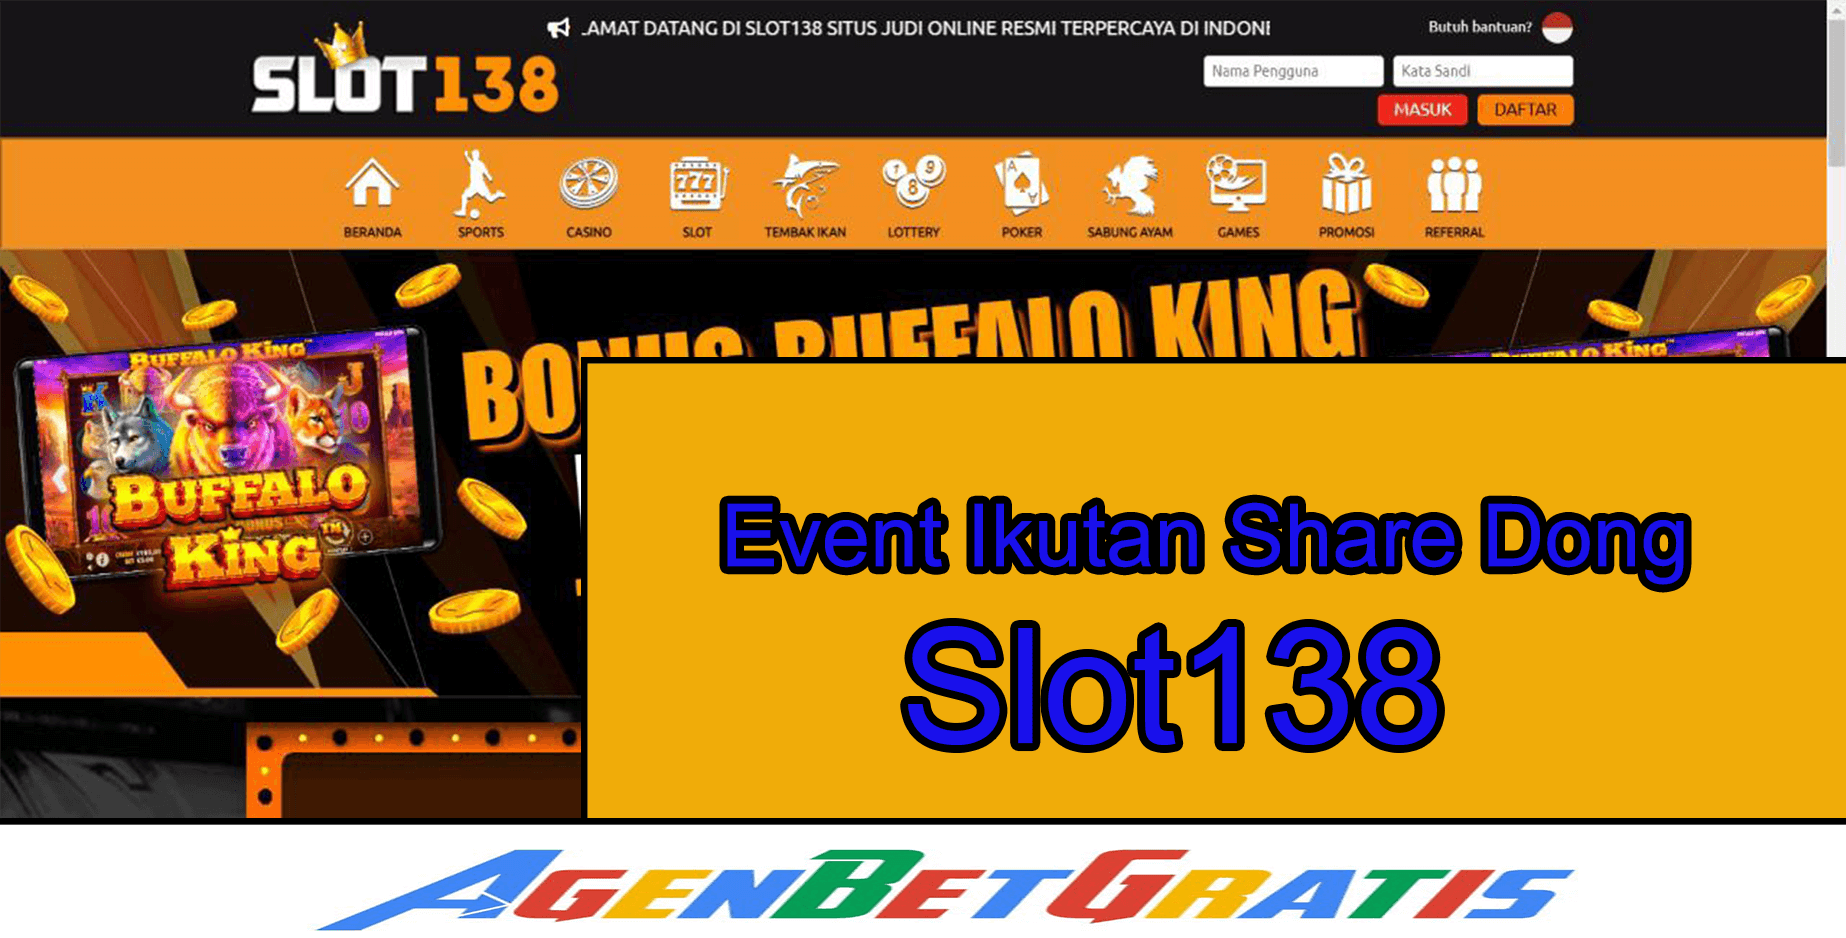 SLOT138 - Event Ikutan Share Dong